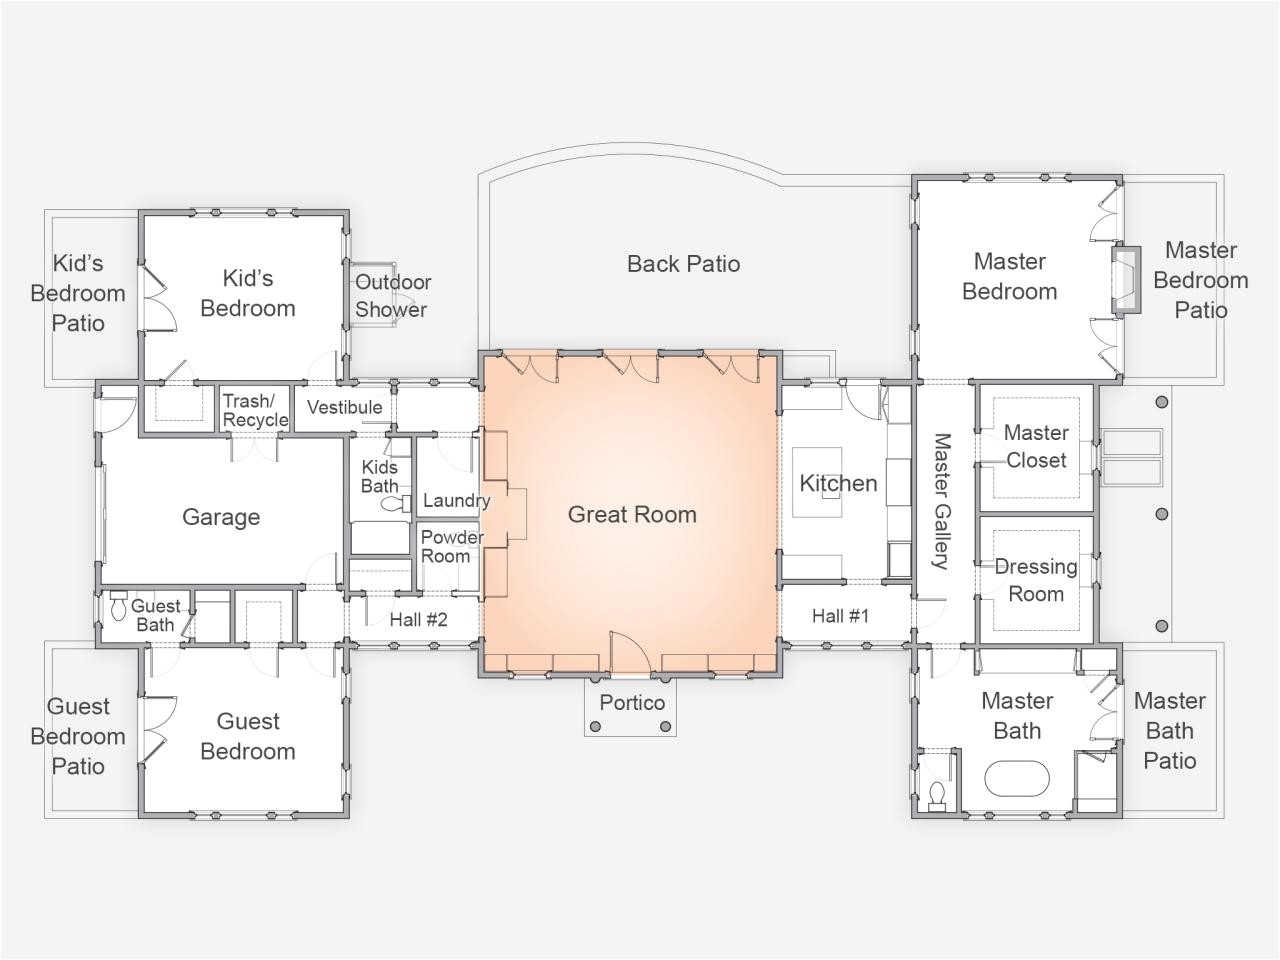 Hgtv Dream Home14 Floor Plan Buy 2015 Hgtv Sweepstaken Home Design Plans Autos Post